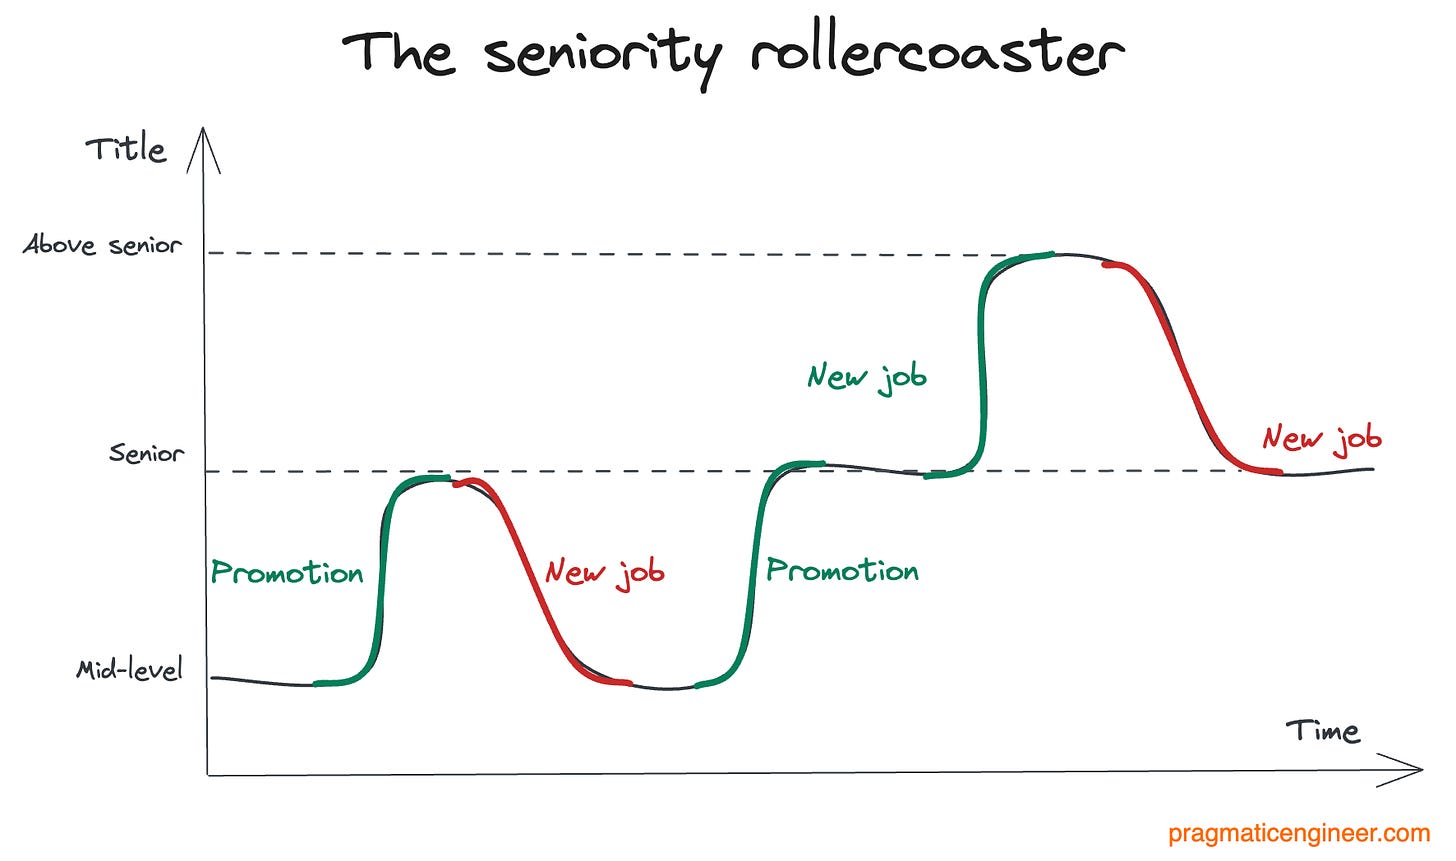 The seniority rollercoaster